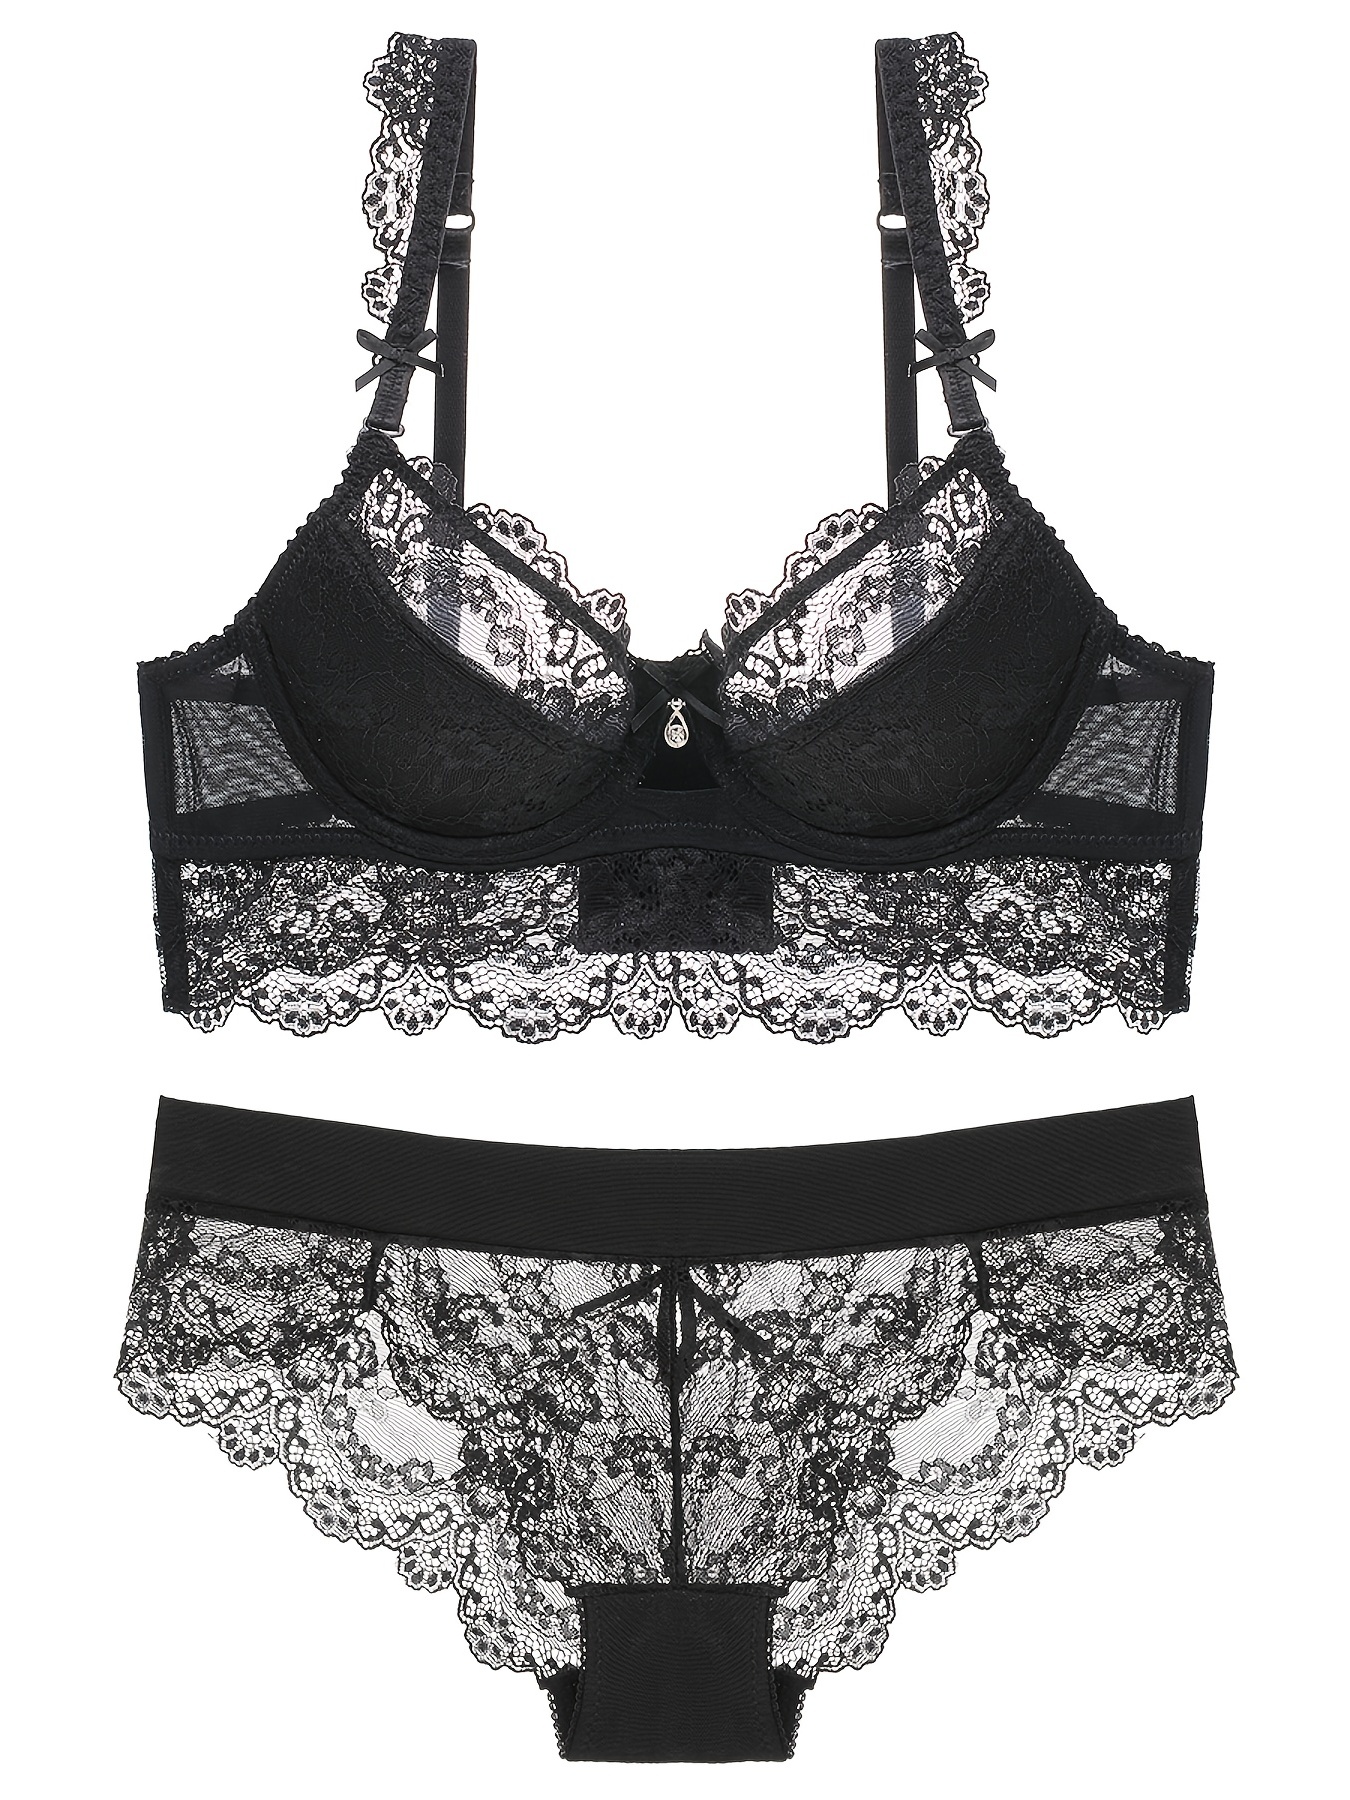 Sewing & Craft, Cotton Lace Net Lingerie Set (Black), Bra & Panty